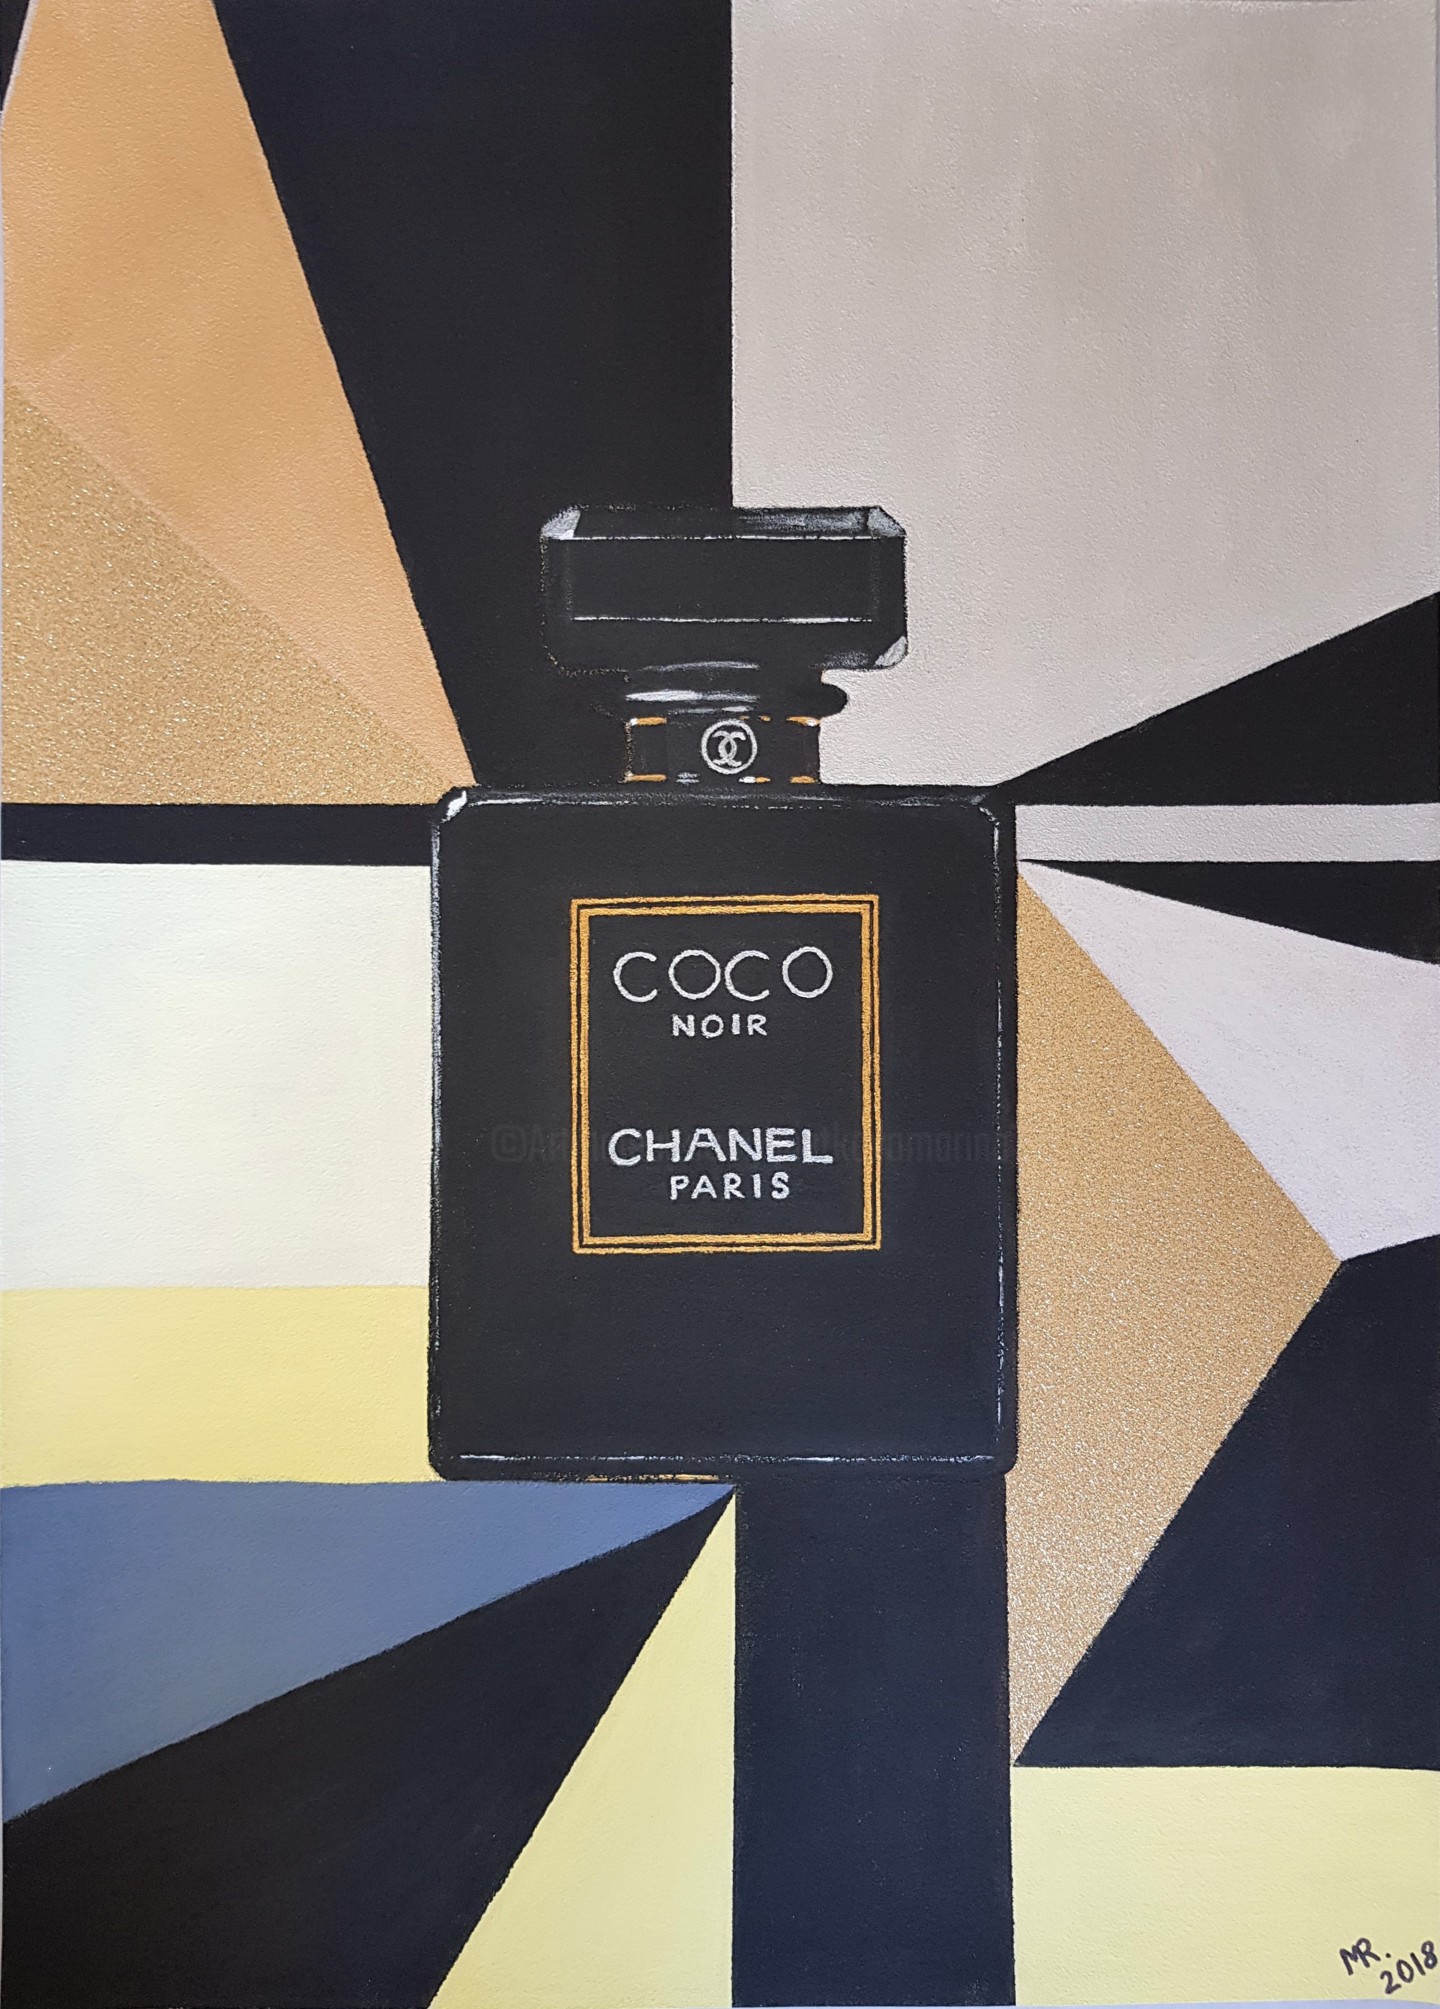 Coco Chanel Noir.das Design., Painting by Marie Ruda